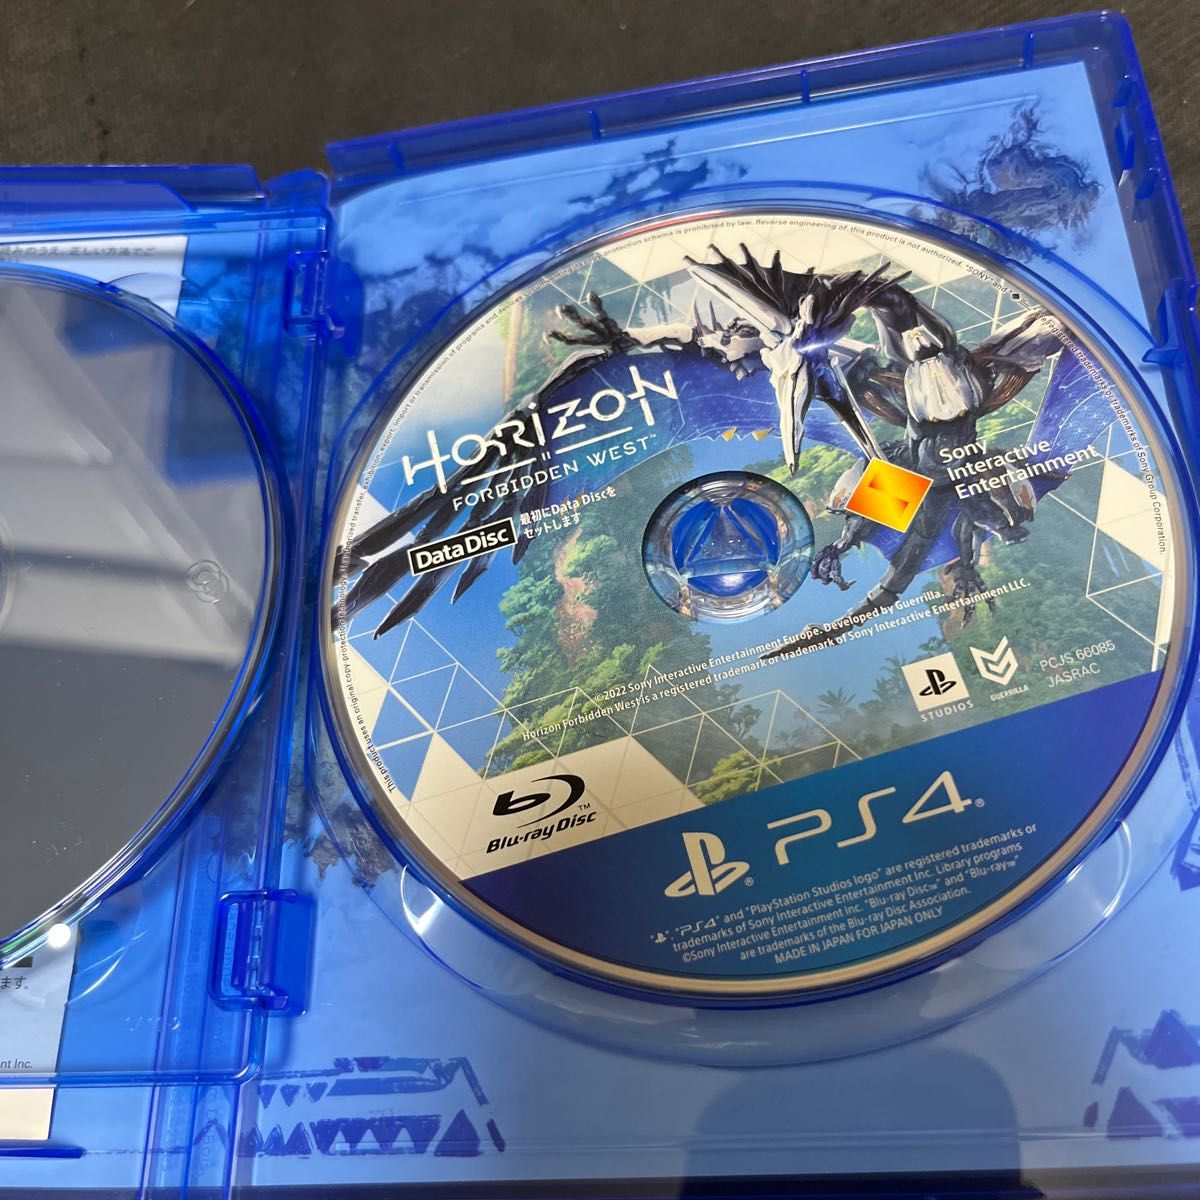 【PS4】 Horizon Forbidden West [通常版] ホライゾン